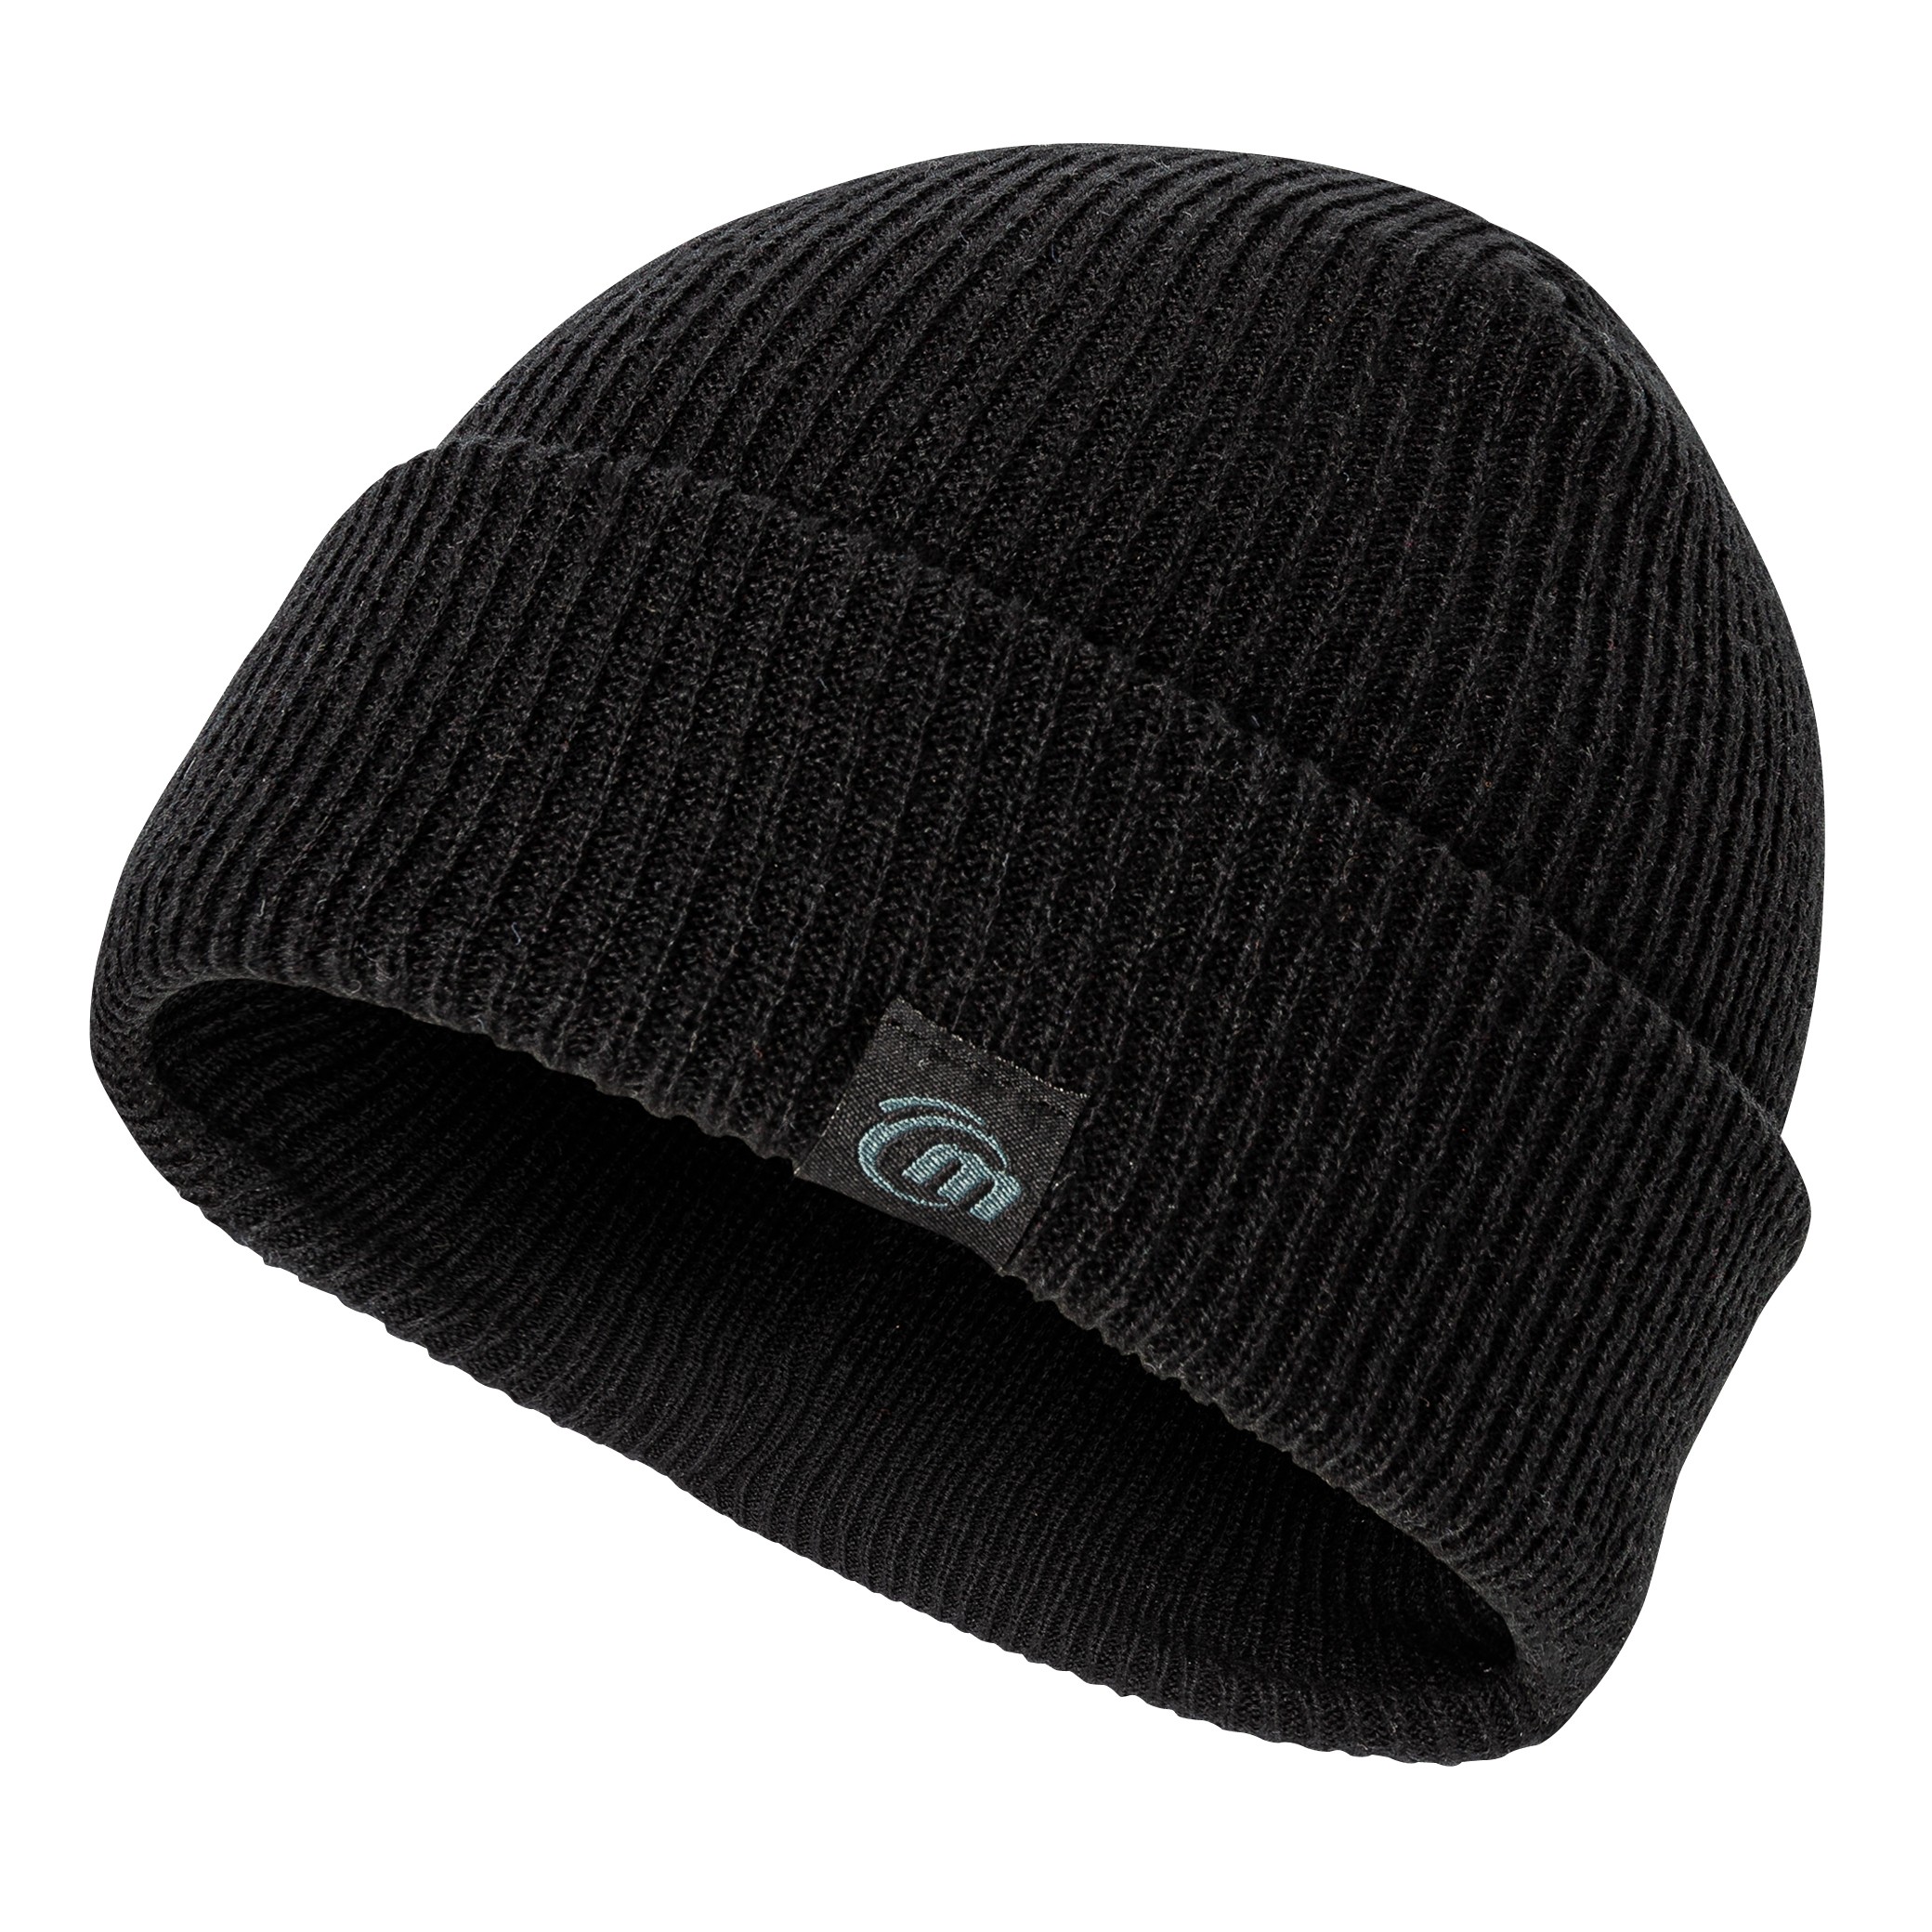 https://www.molinel.com/shop/16337/bonnet-mixte-noir.jpg